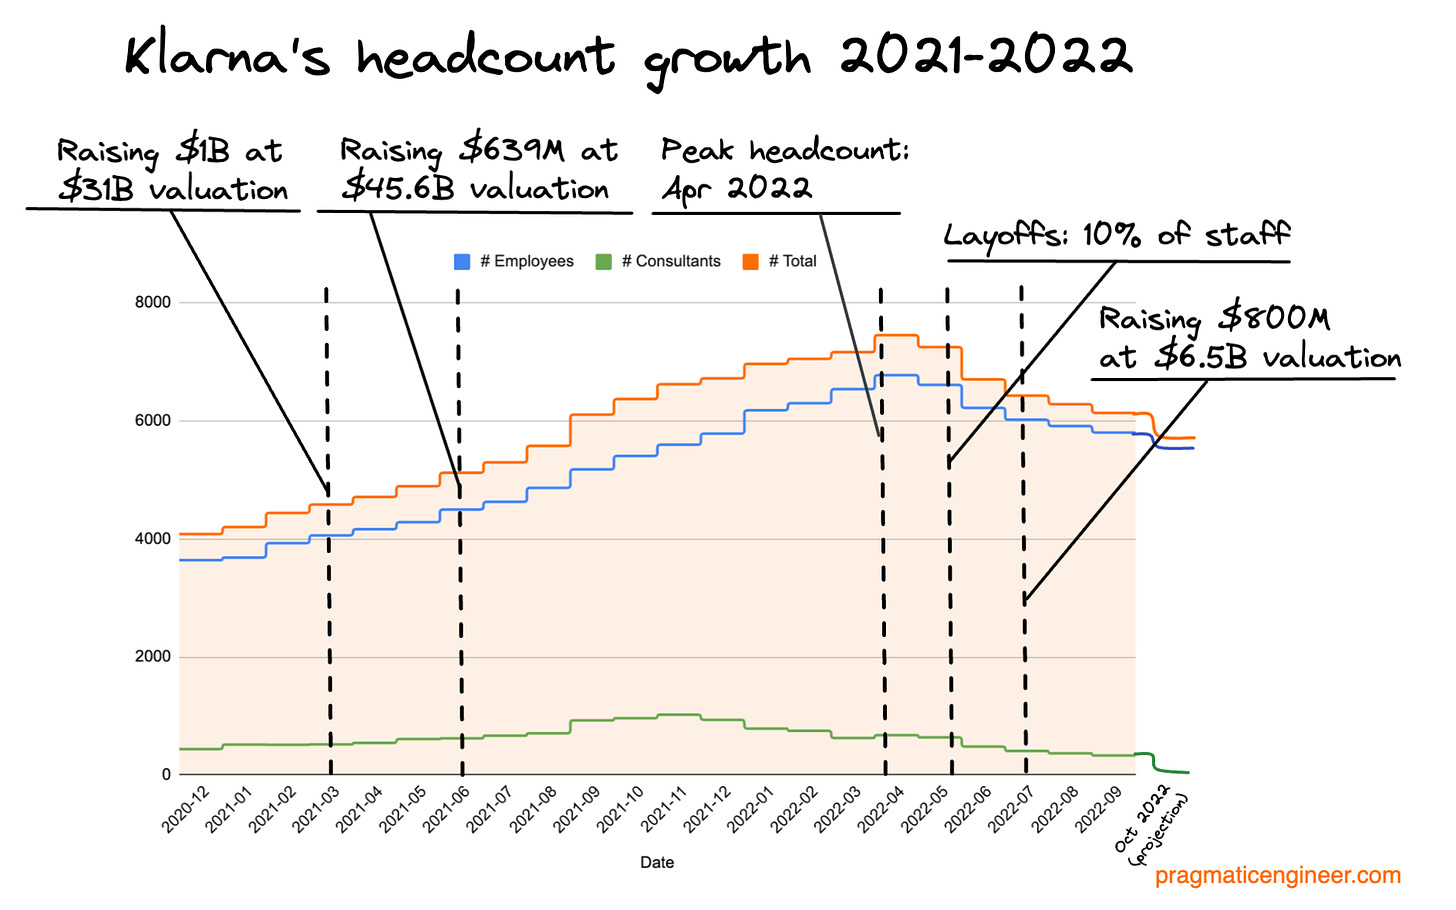 Klarna’s headcount growth from December 2020 to October 2022.